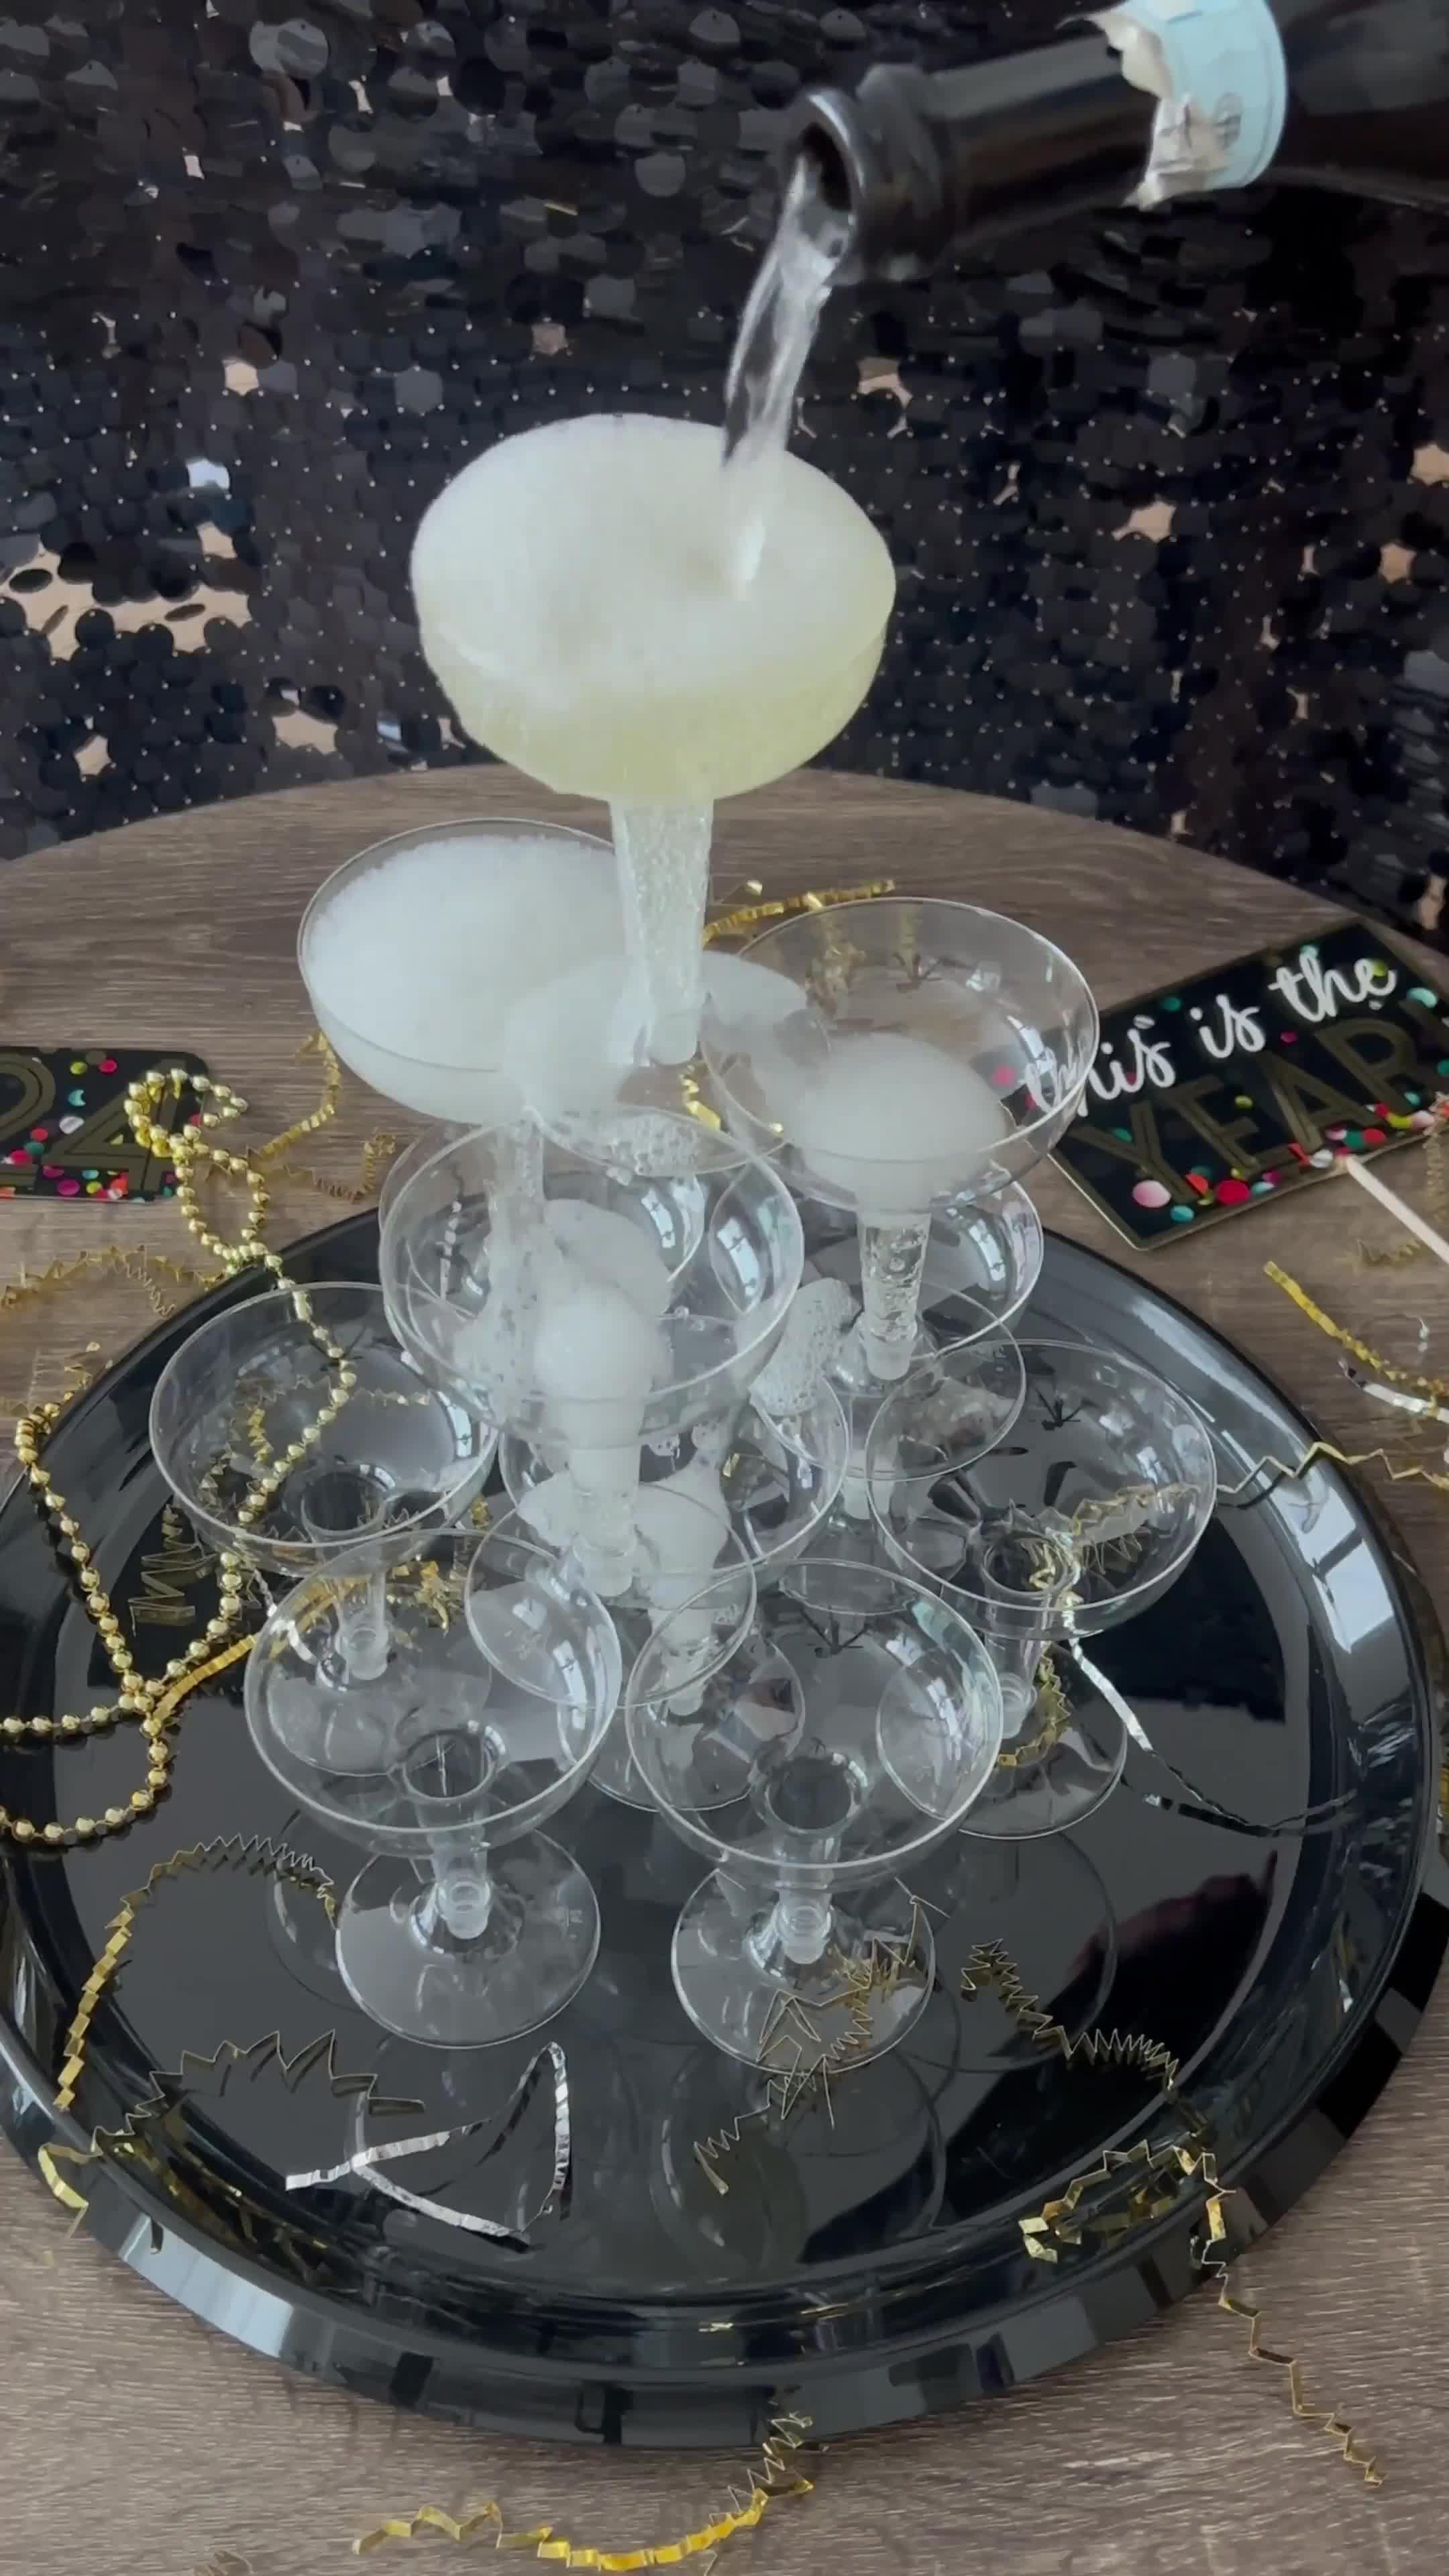 Clear Plastic Champagne Coupe Glasses, 8oz, 20ct